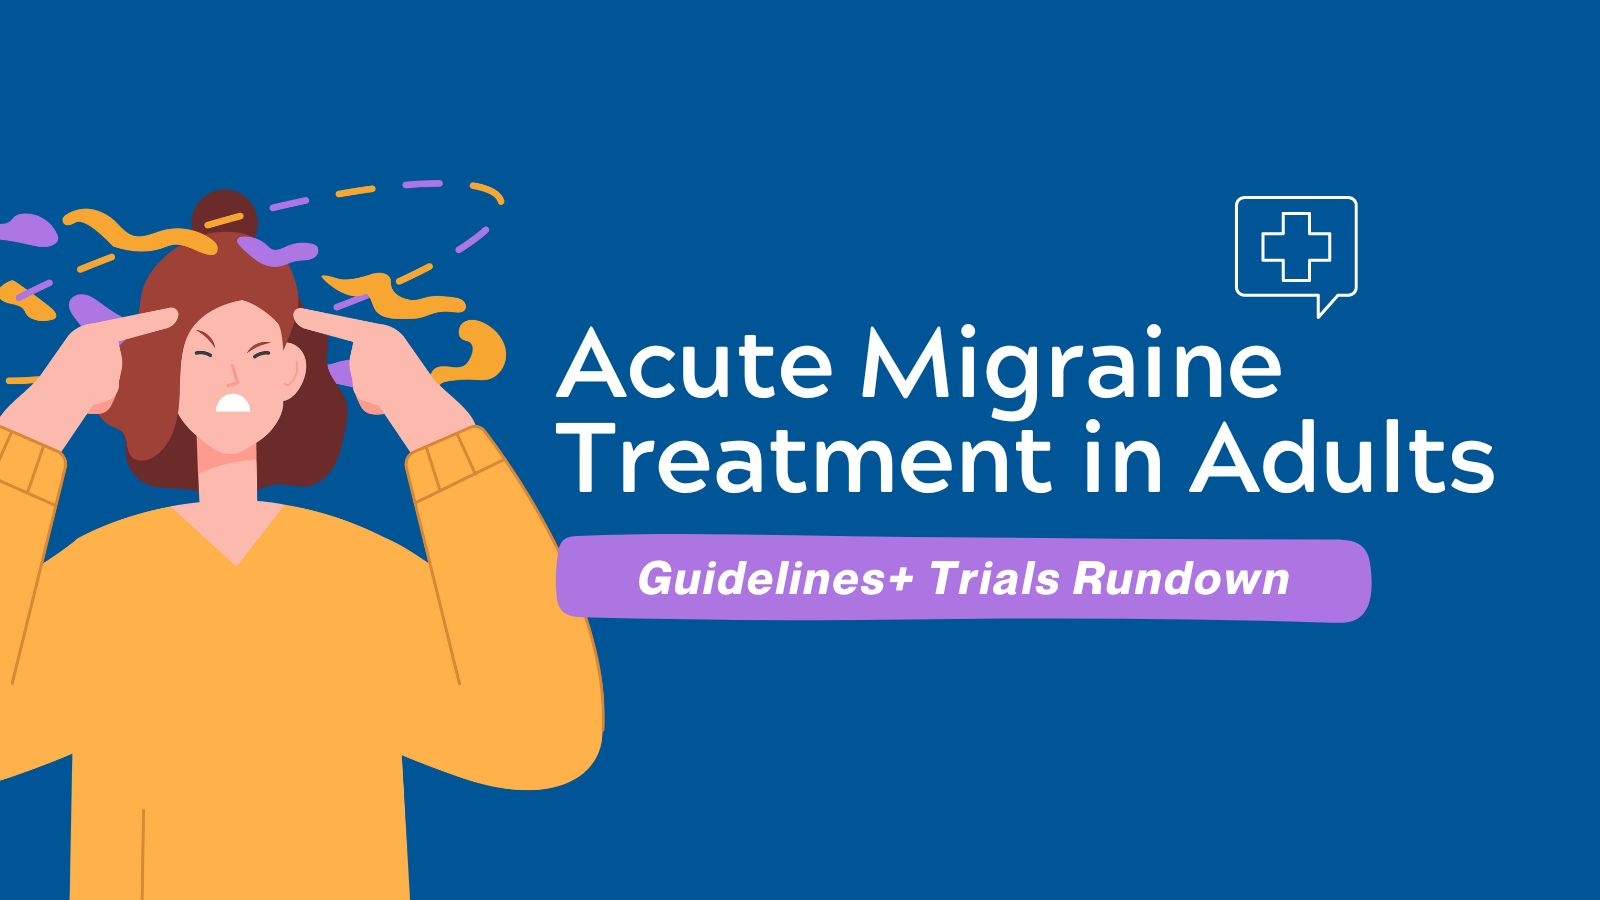 Acute Migraine Guidelines + Trials Rundown